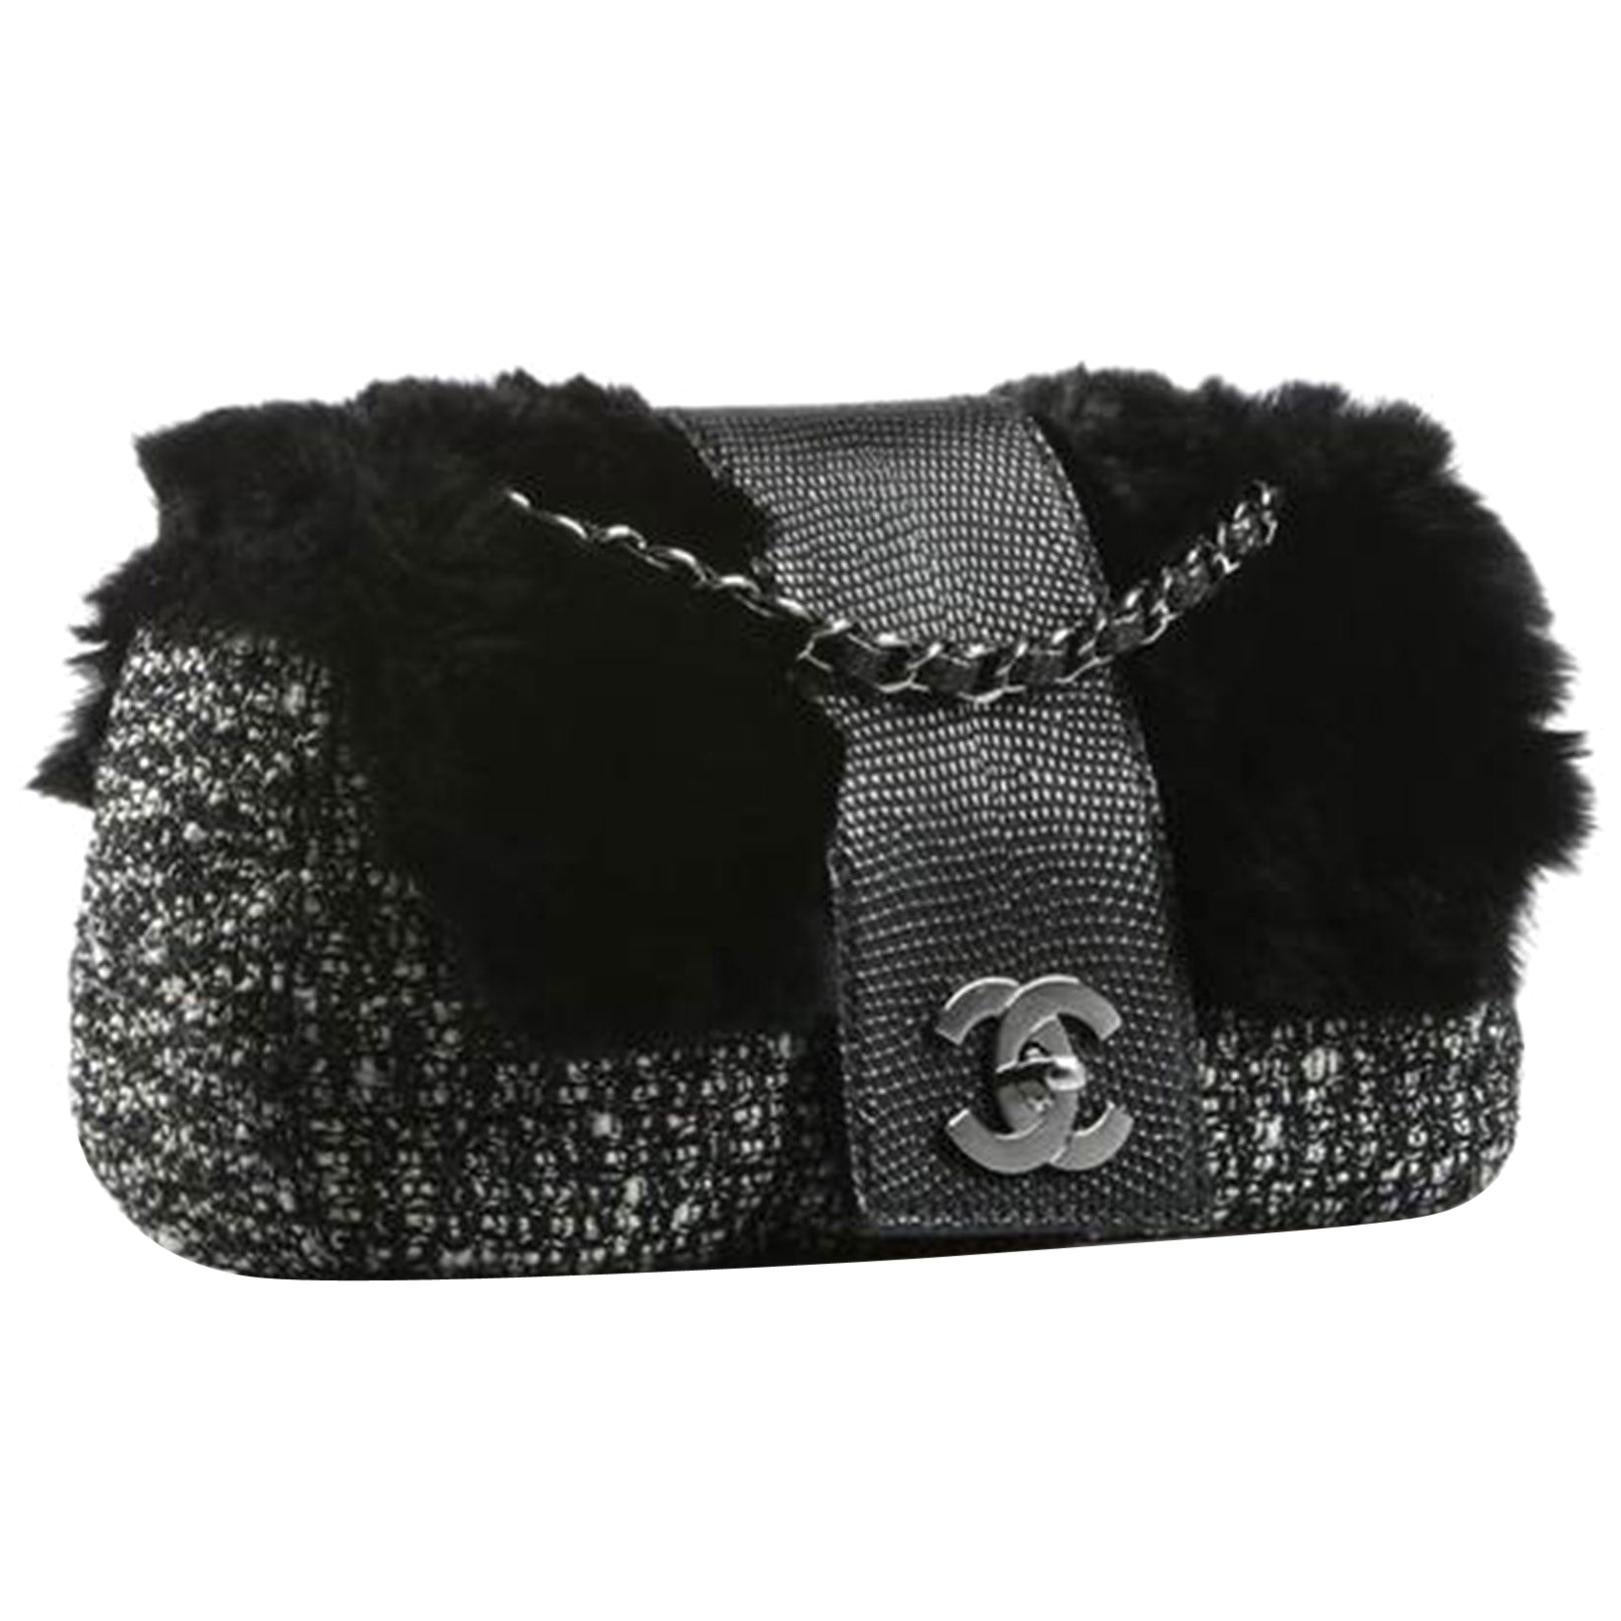 Chanel Classic Flap Limited Edition 2005 Black & White Grey Tweed Fur  Lizard Bag